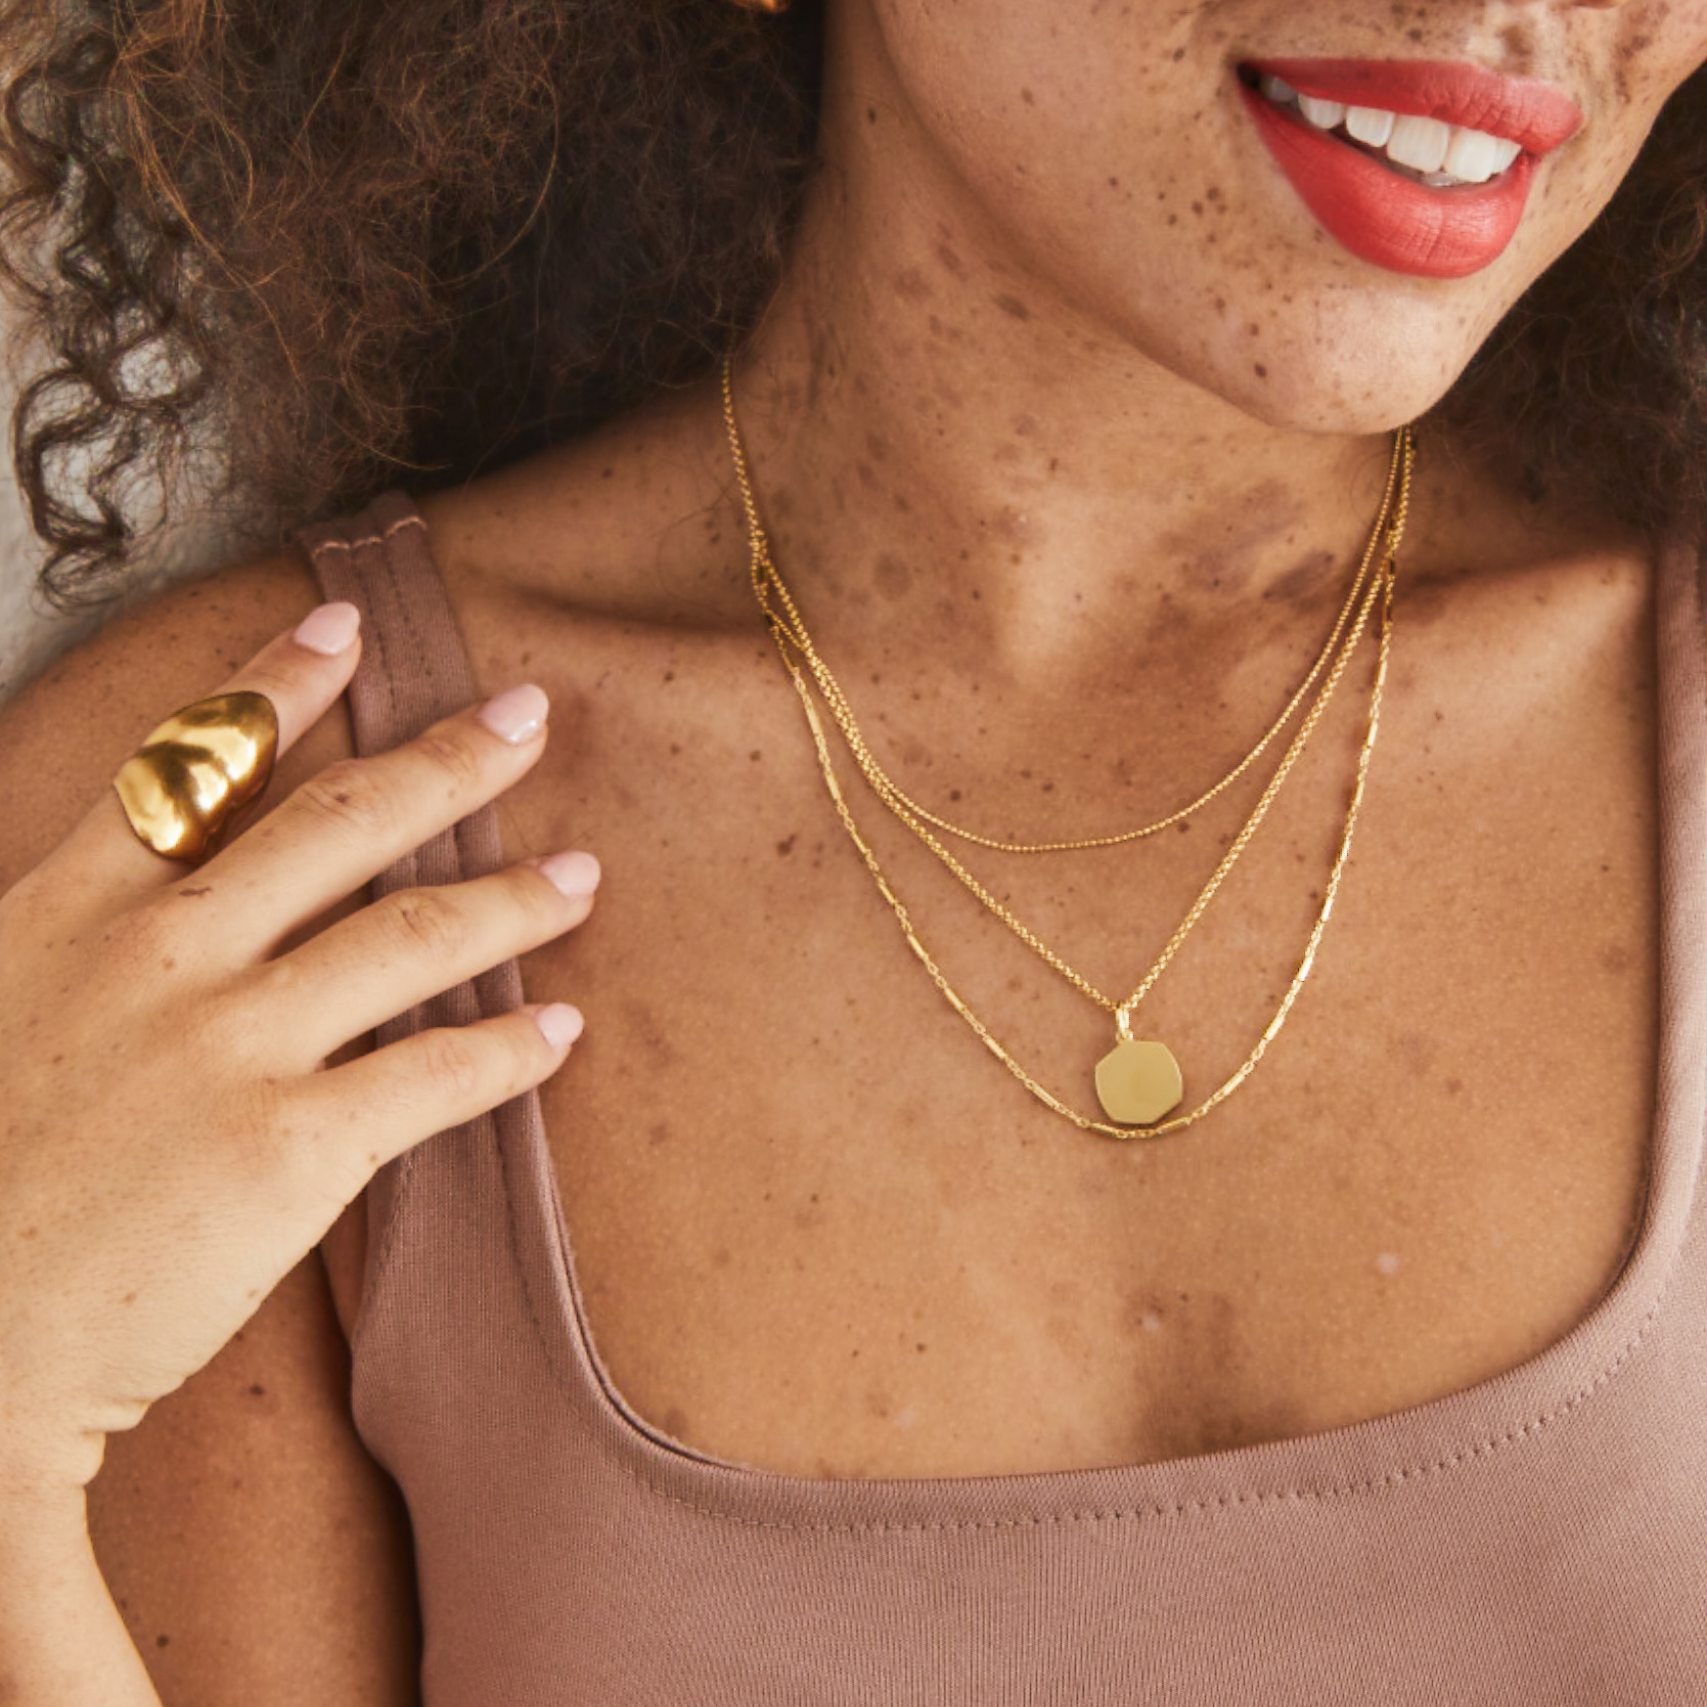 Shop Necklaces Simple yet elegant; quiet yet bold. Meigs Jewelry Tahlequah, OK